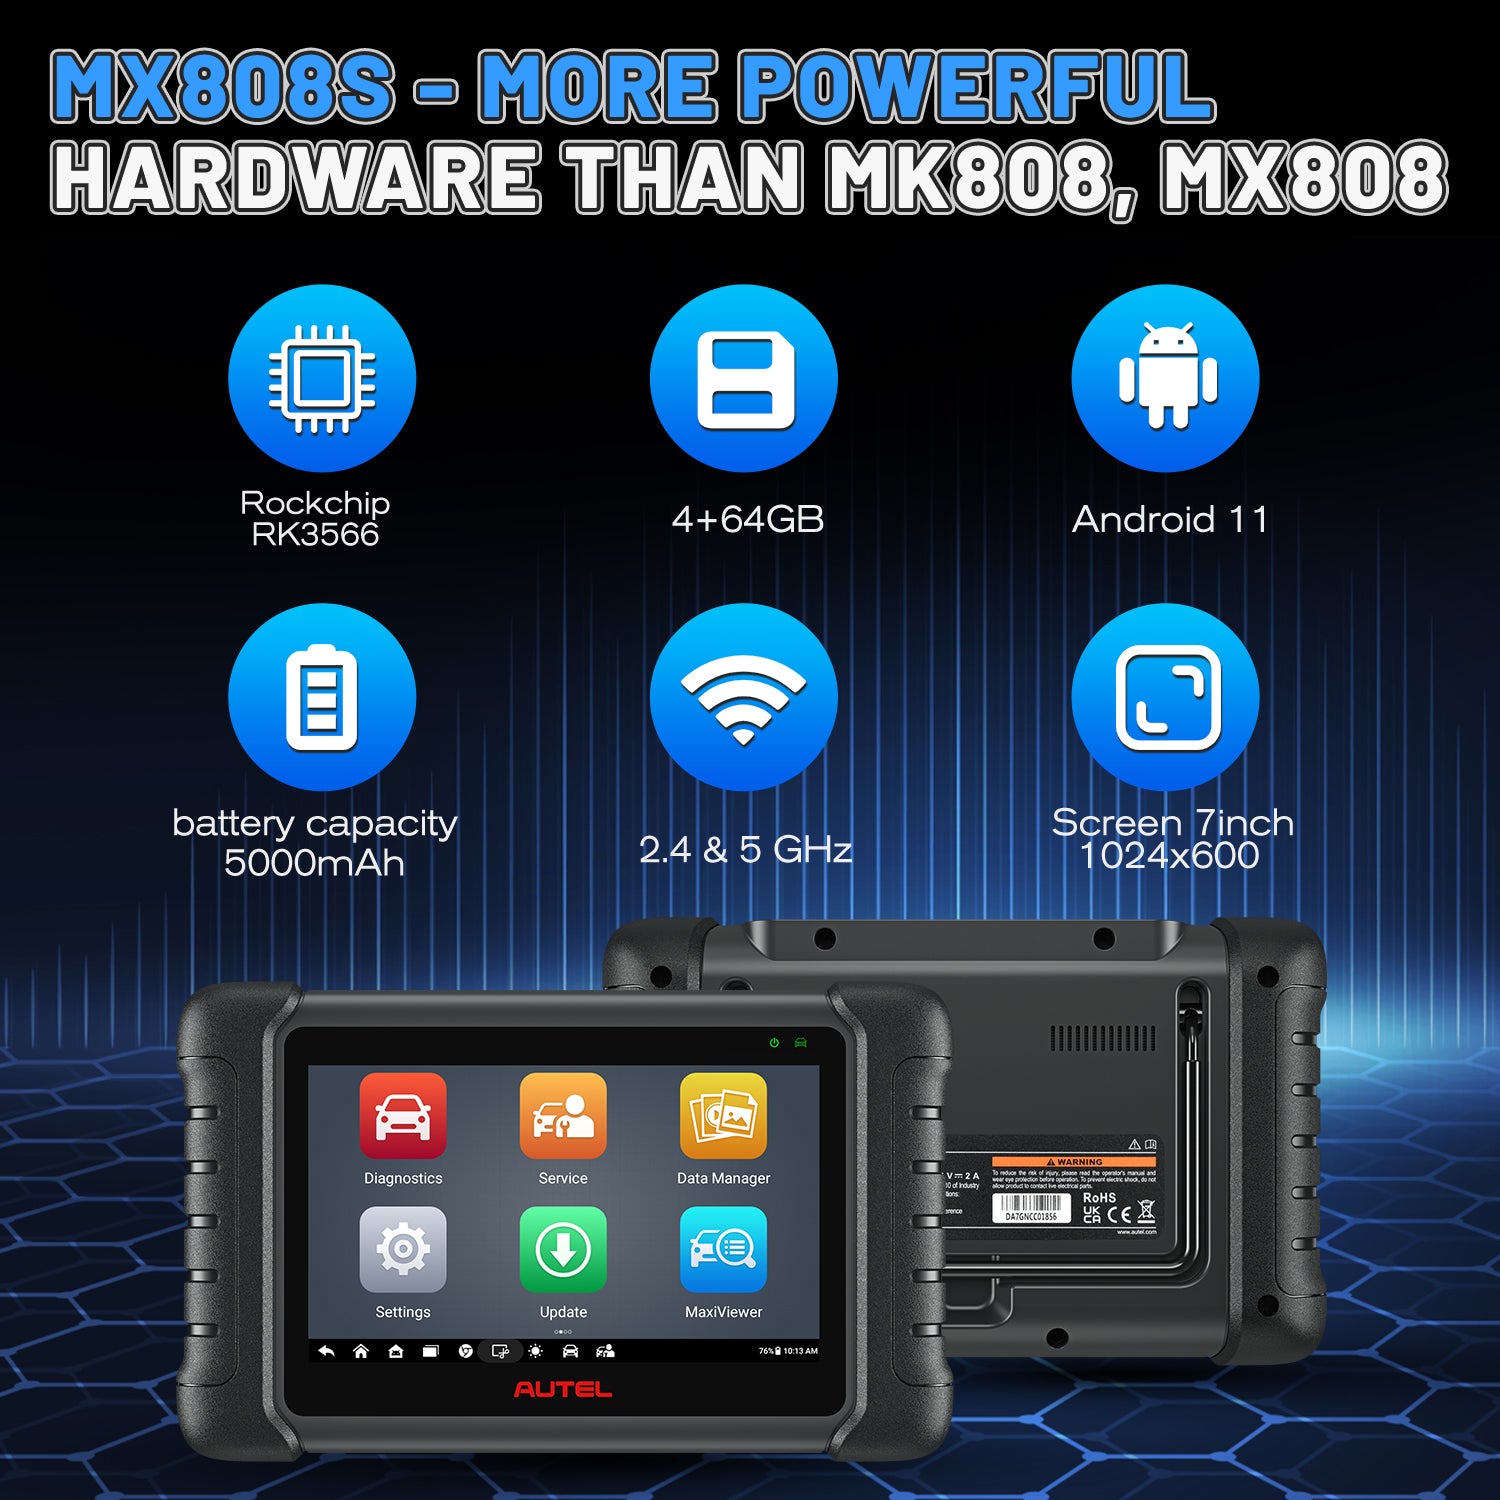 Hardware of MX808S Scanner